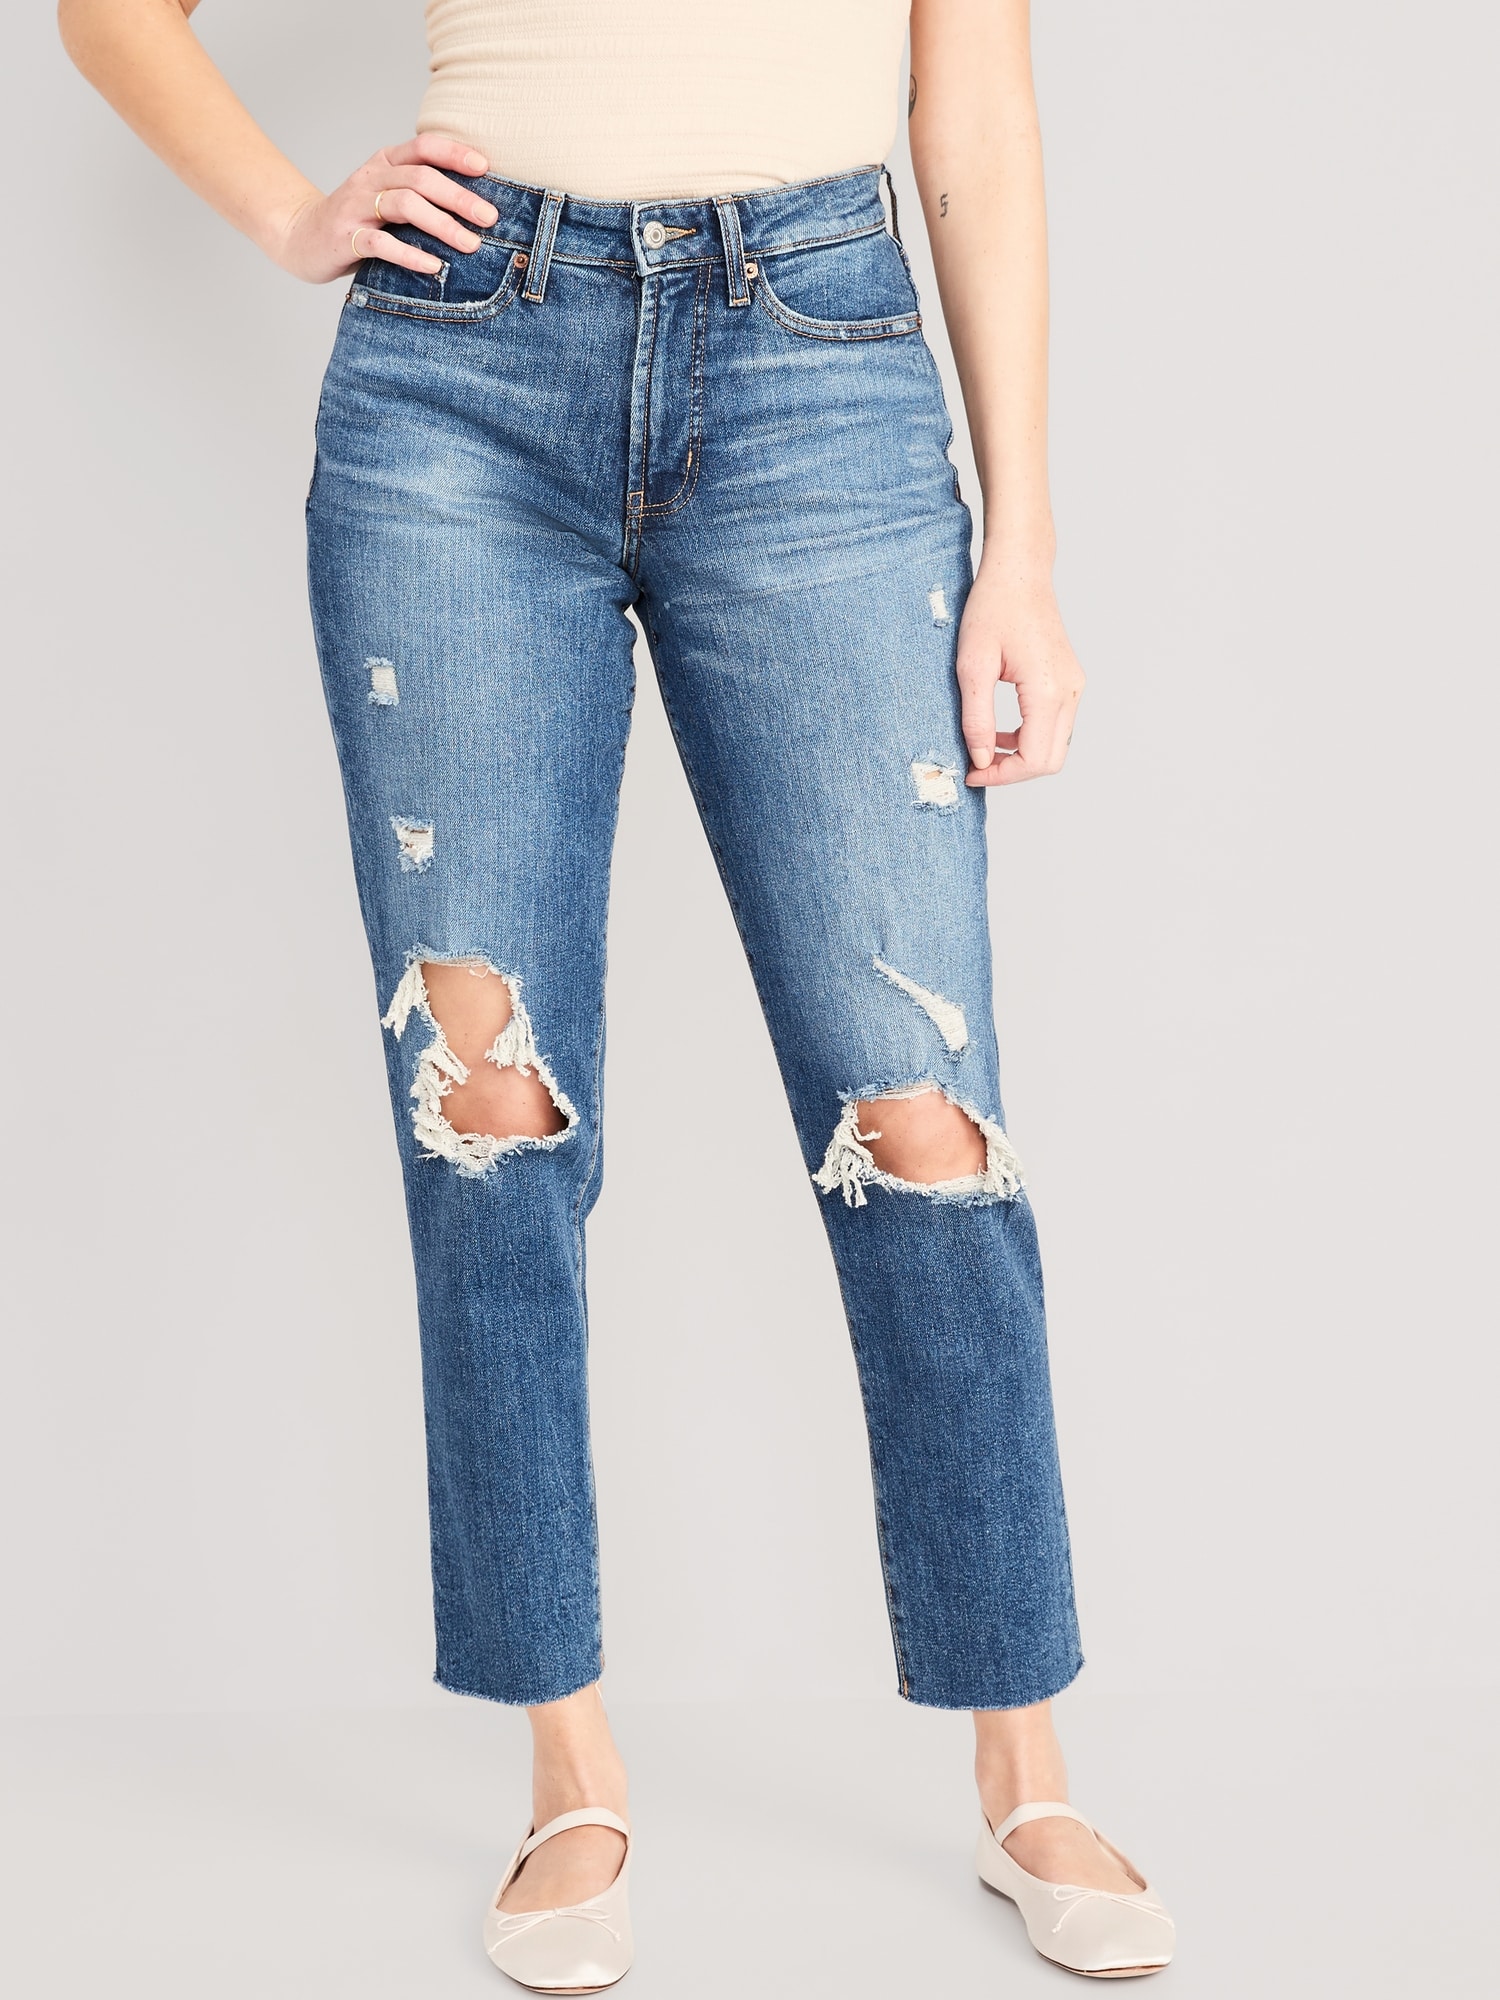 Oldnavy Curvy High-Waisted OG Straight Ankle Jeans for Women